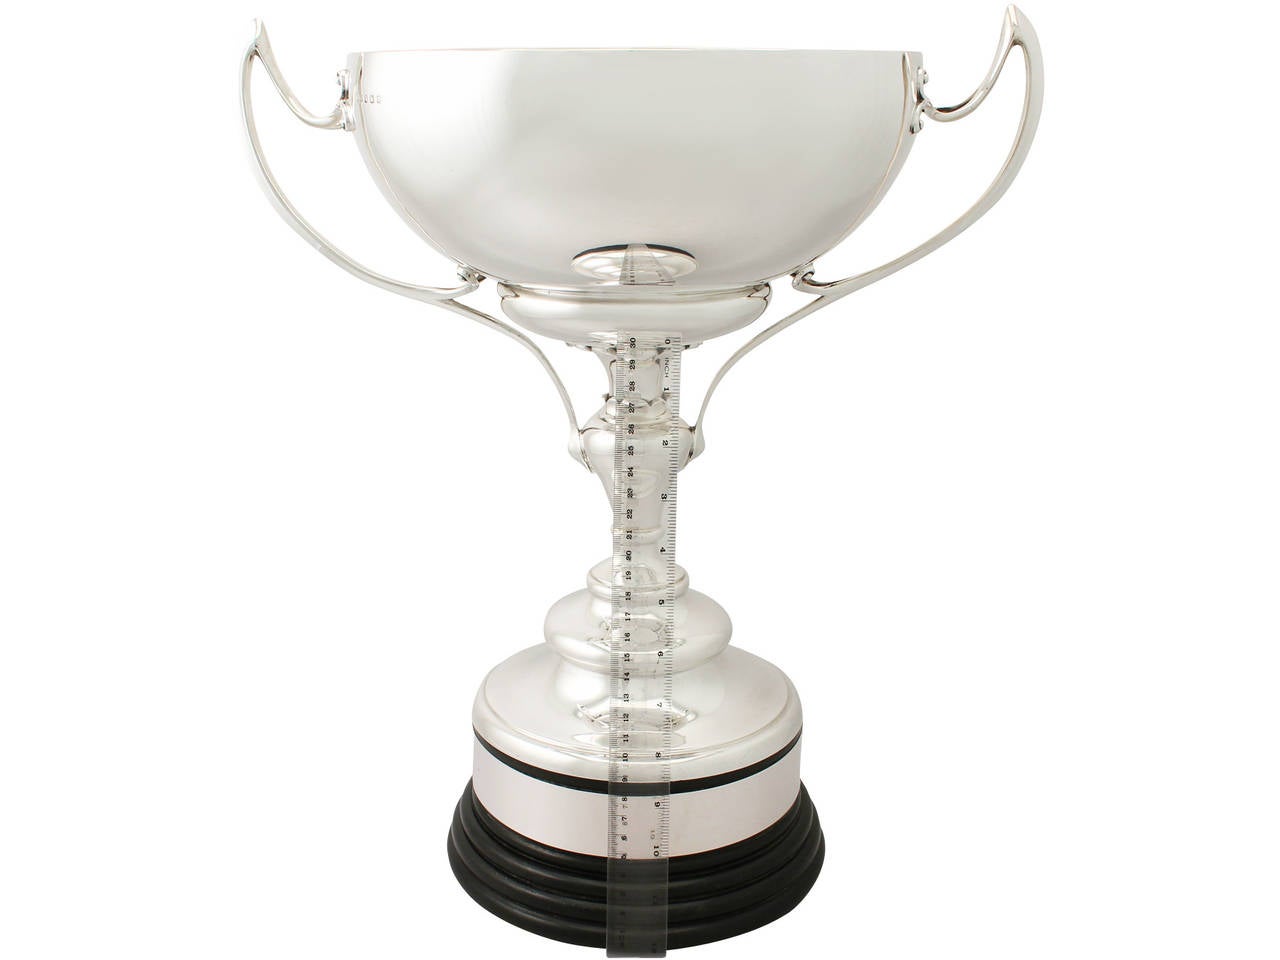 Sterling Silver Presentation Cup/Bowl - Art Nouveau Style - Antique George V 4